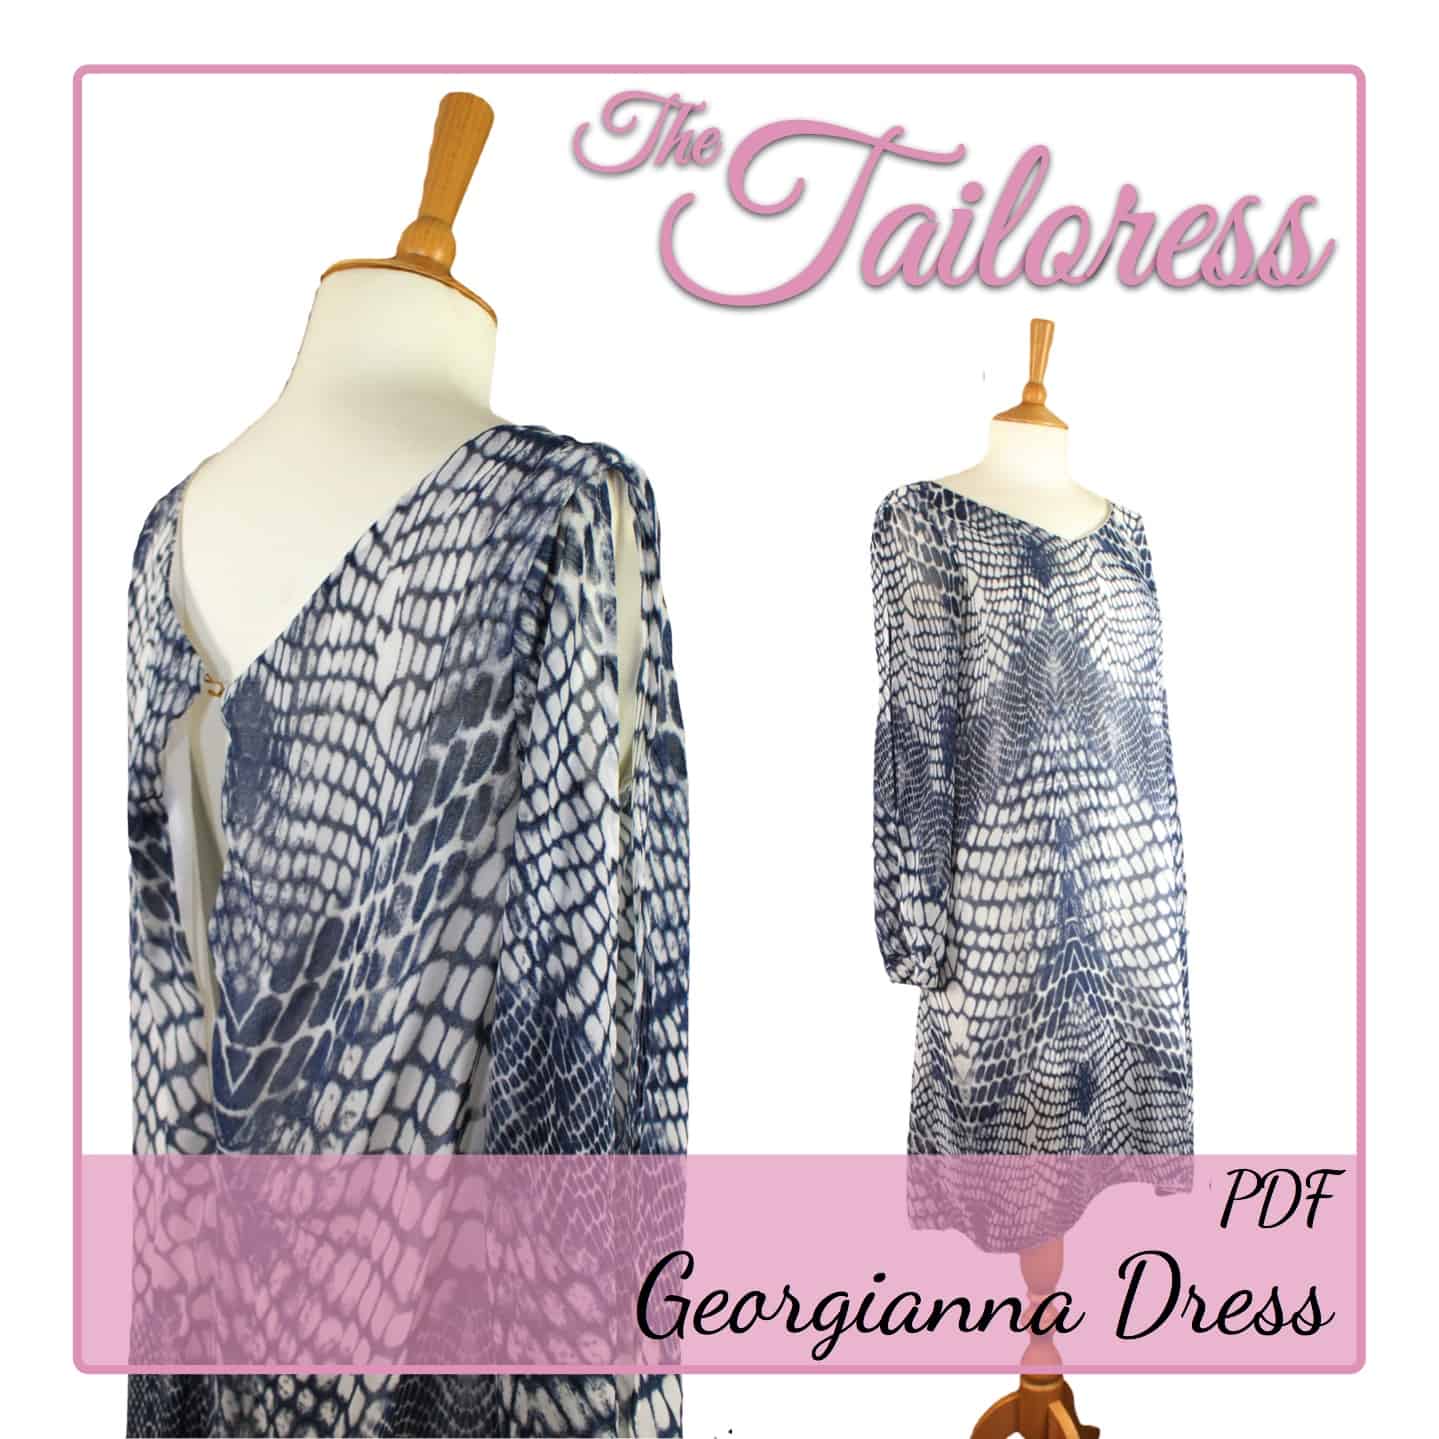 Georgianna Dress PDF Sewing Pattern - The Tailoress PDF Sewing Patterns